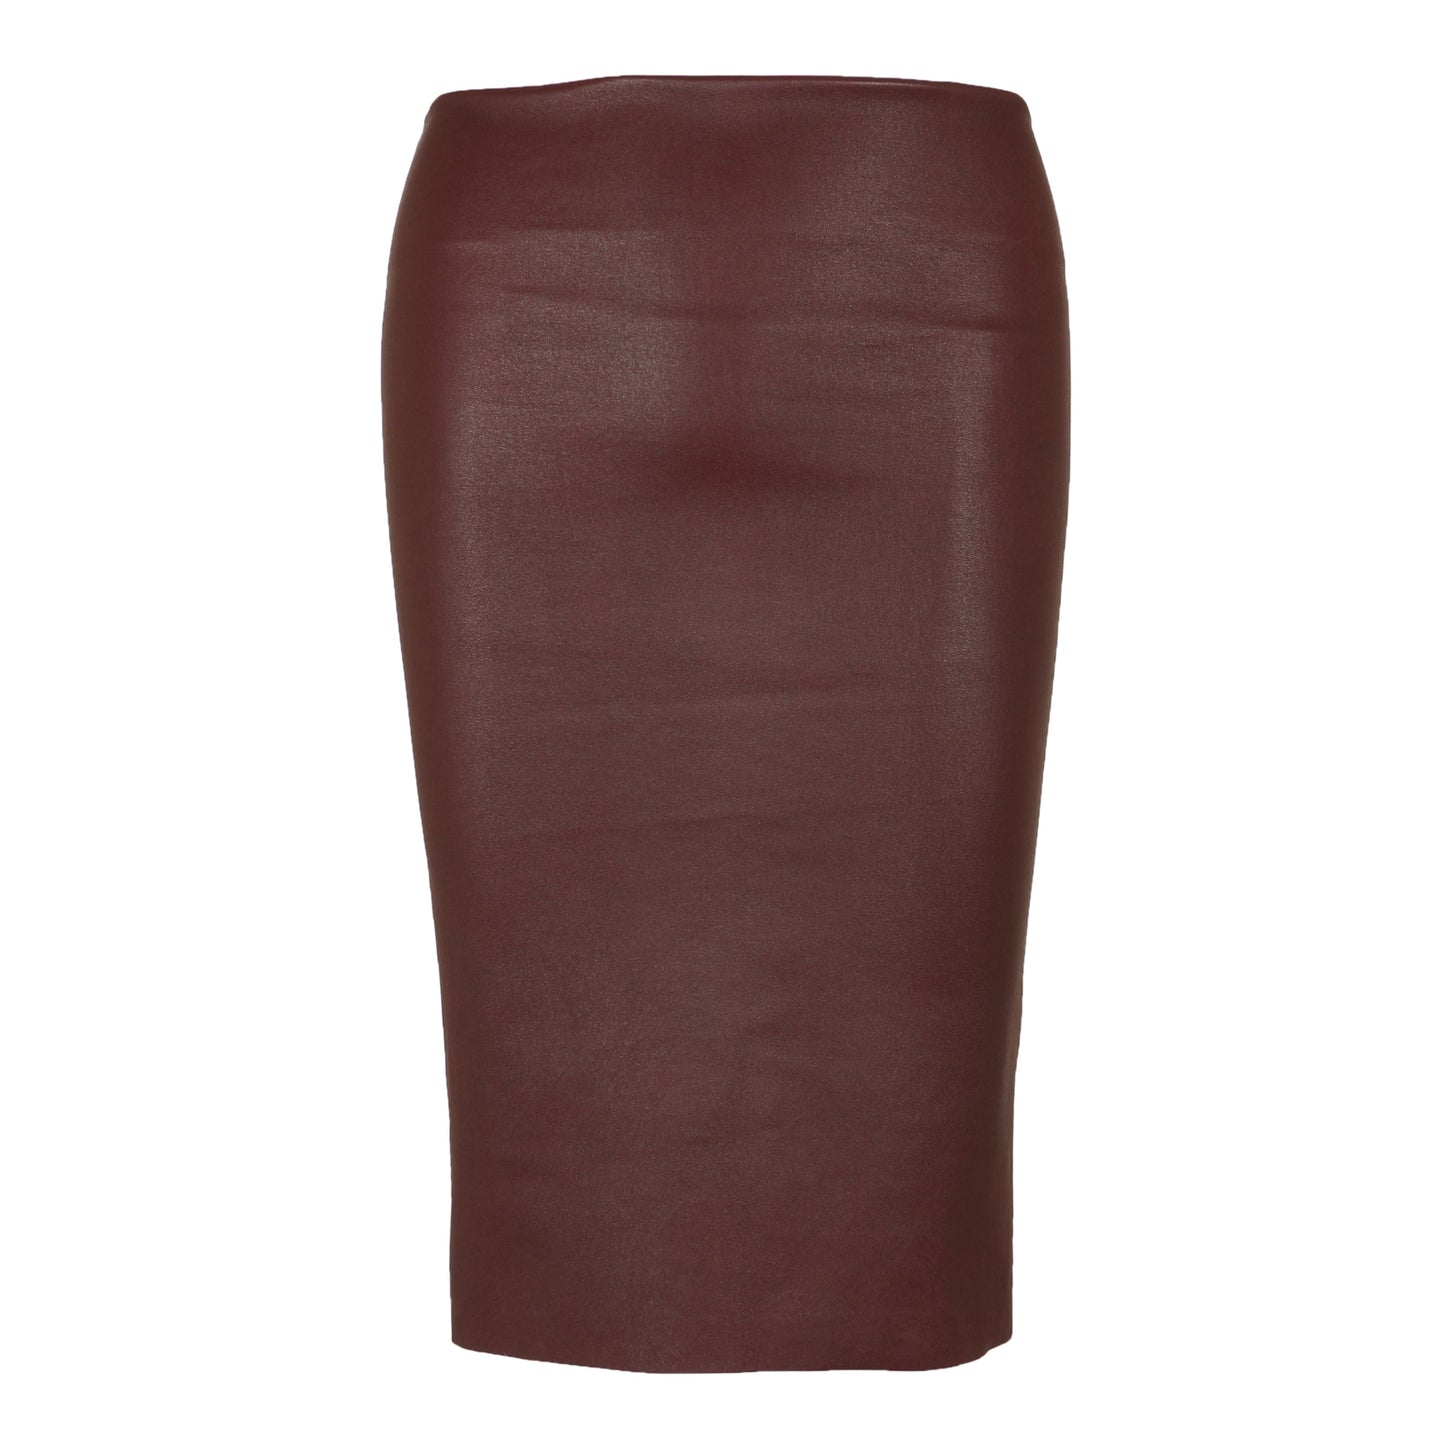 Leather skirts - dark brown